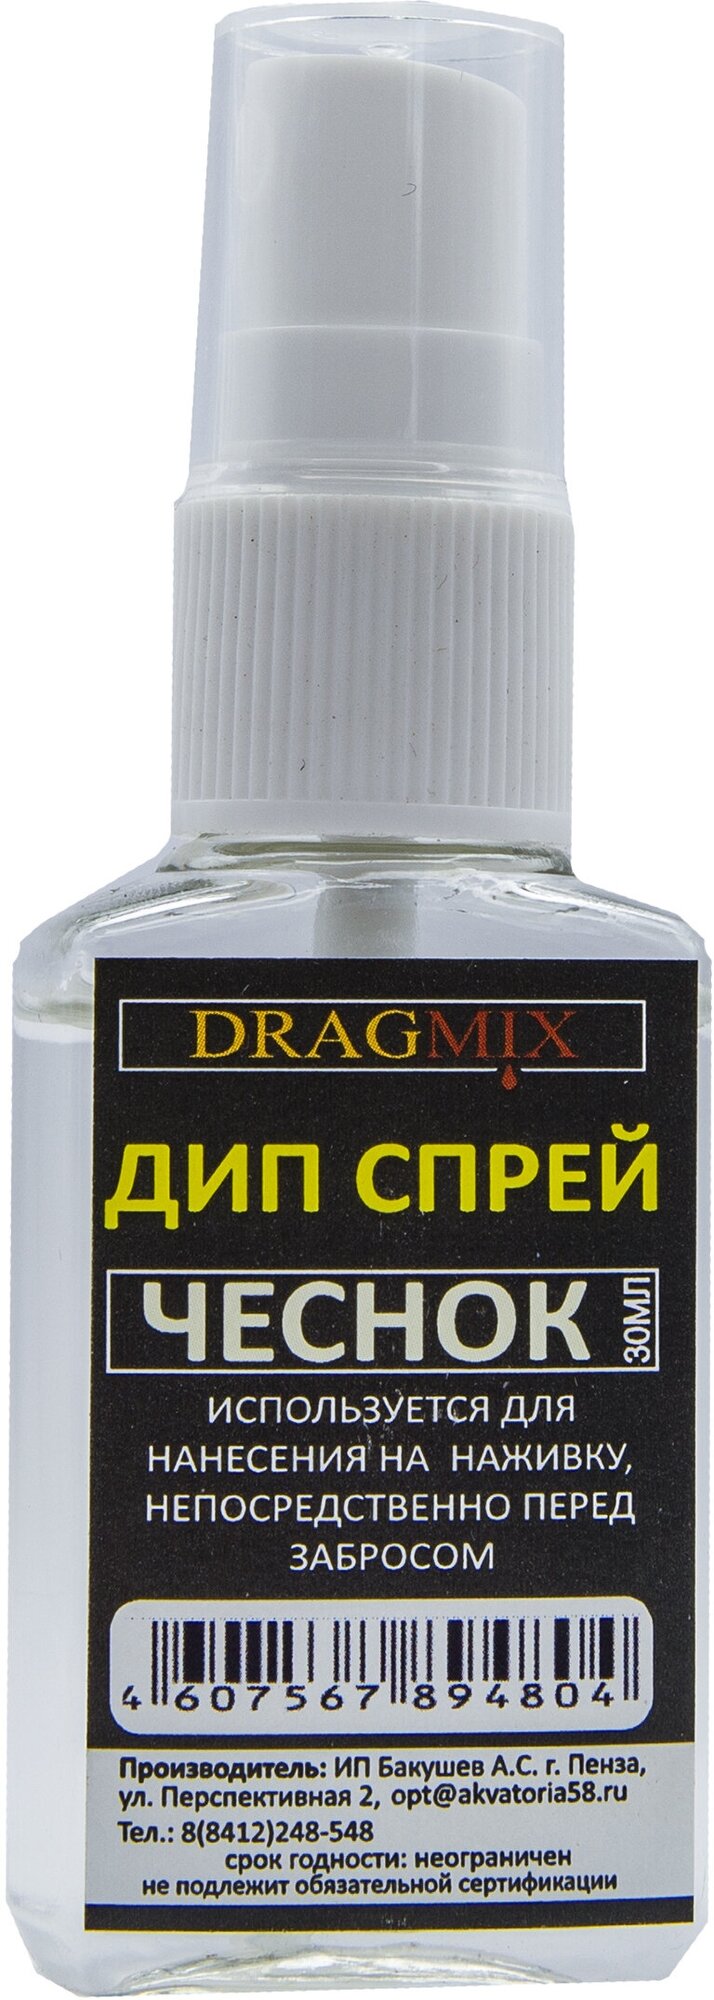 Дип Спрей Dragmix Чеснок 30 мл